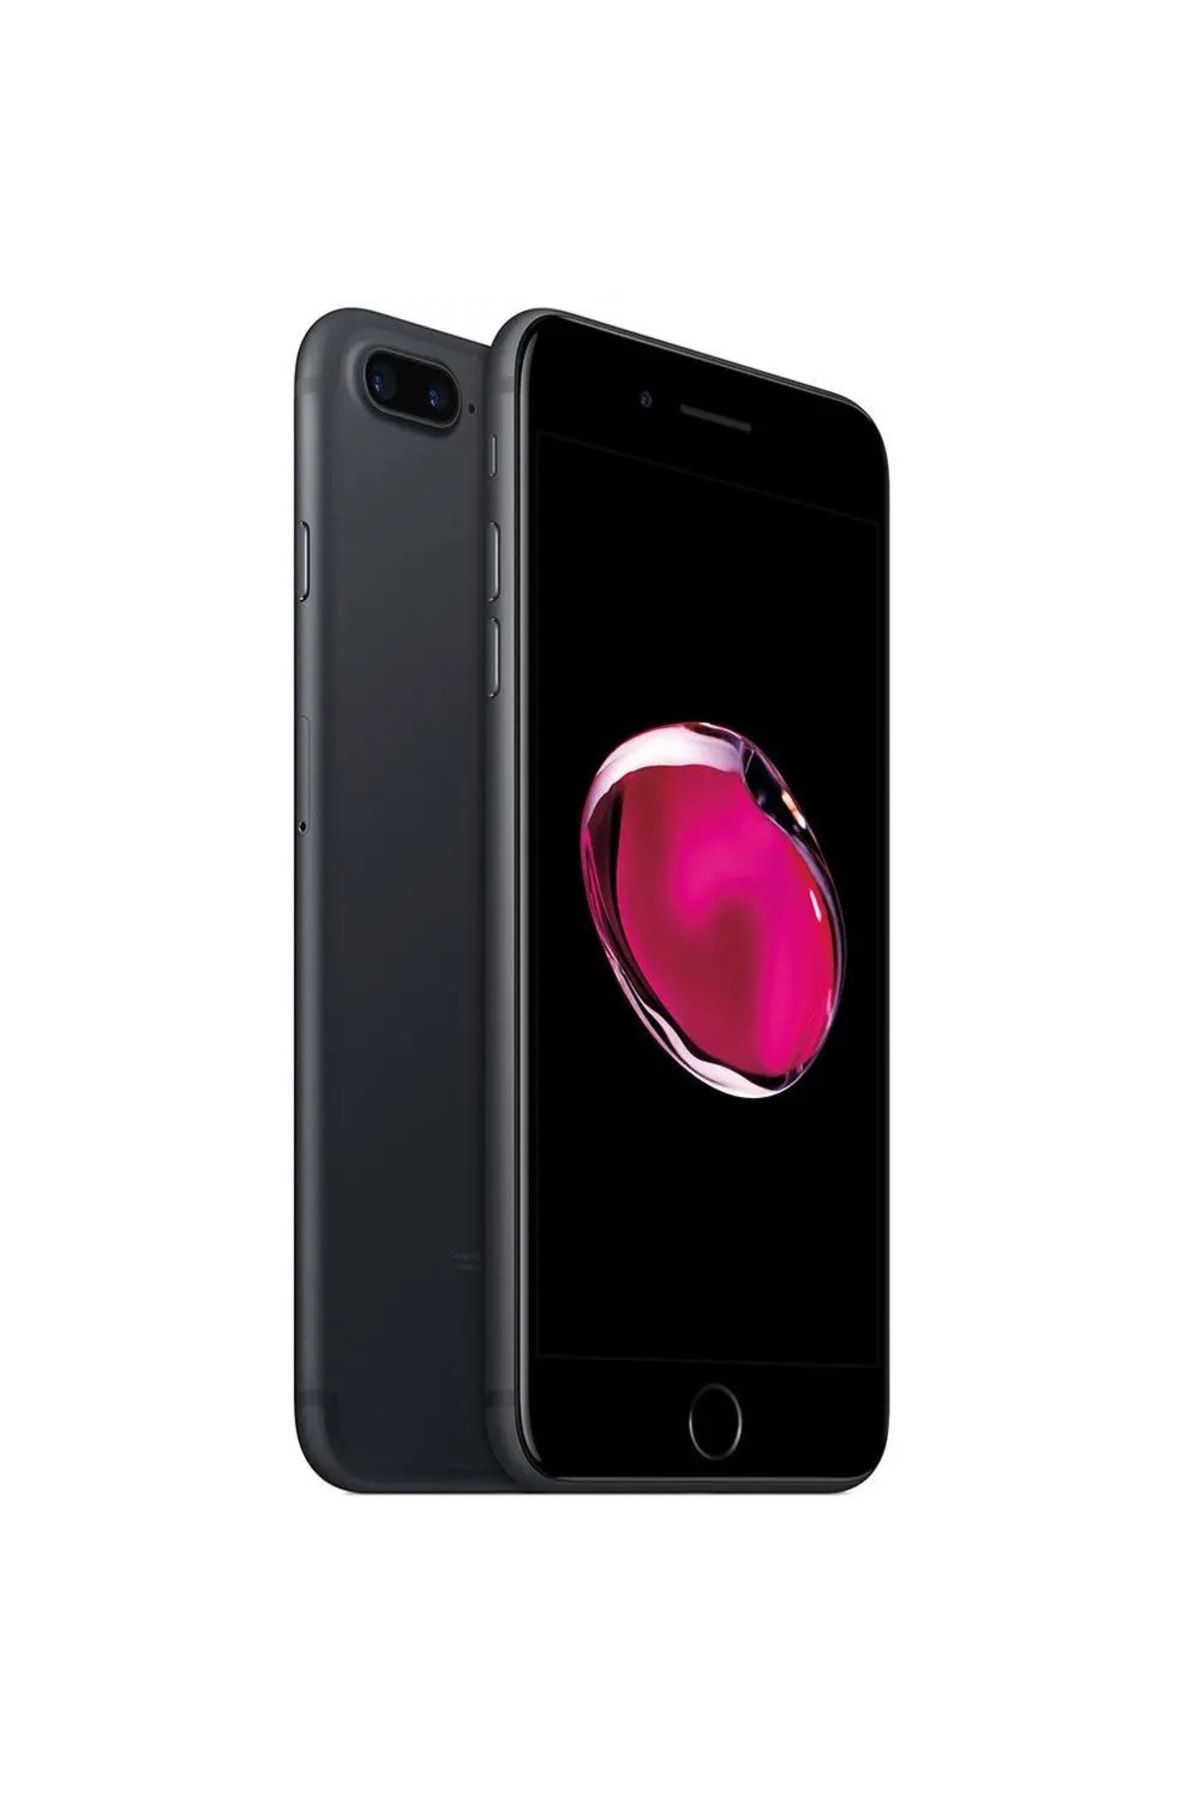 Apple Yenilenmiş iPhone 7 Plus 32 GB Black Cep Telefonu (12 Ay Garantili) - B Kalite